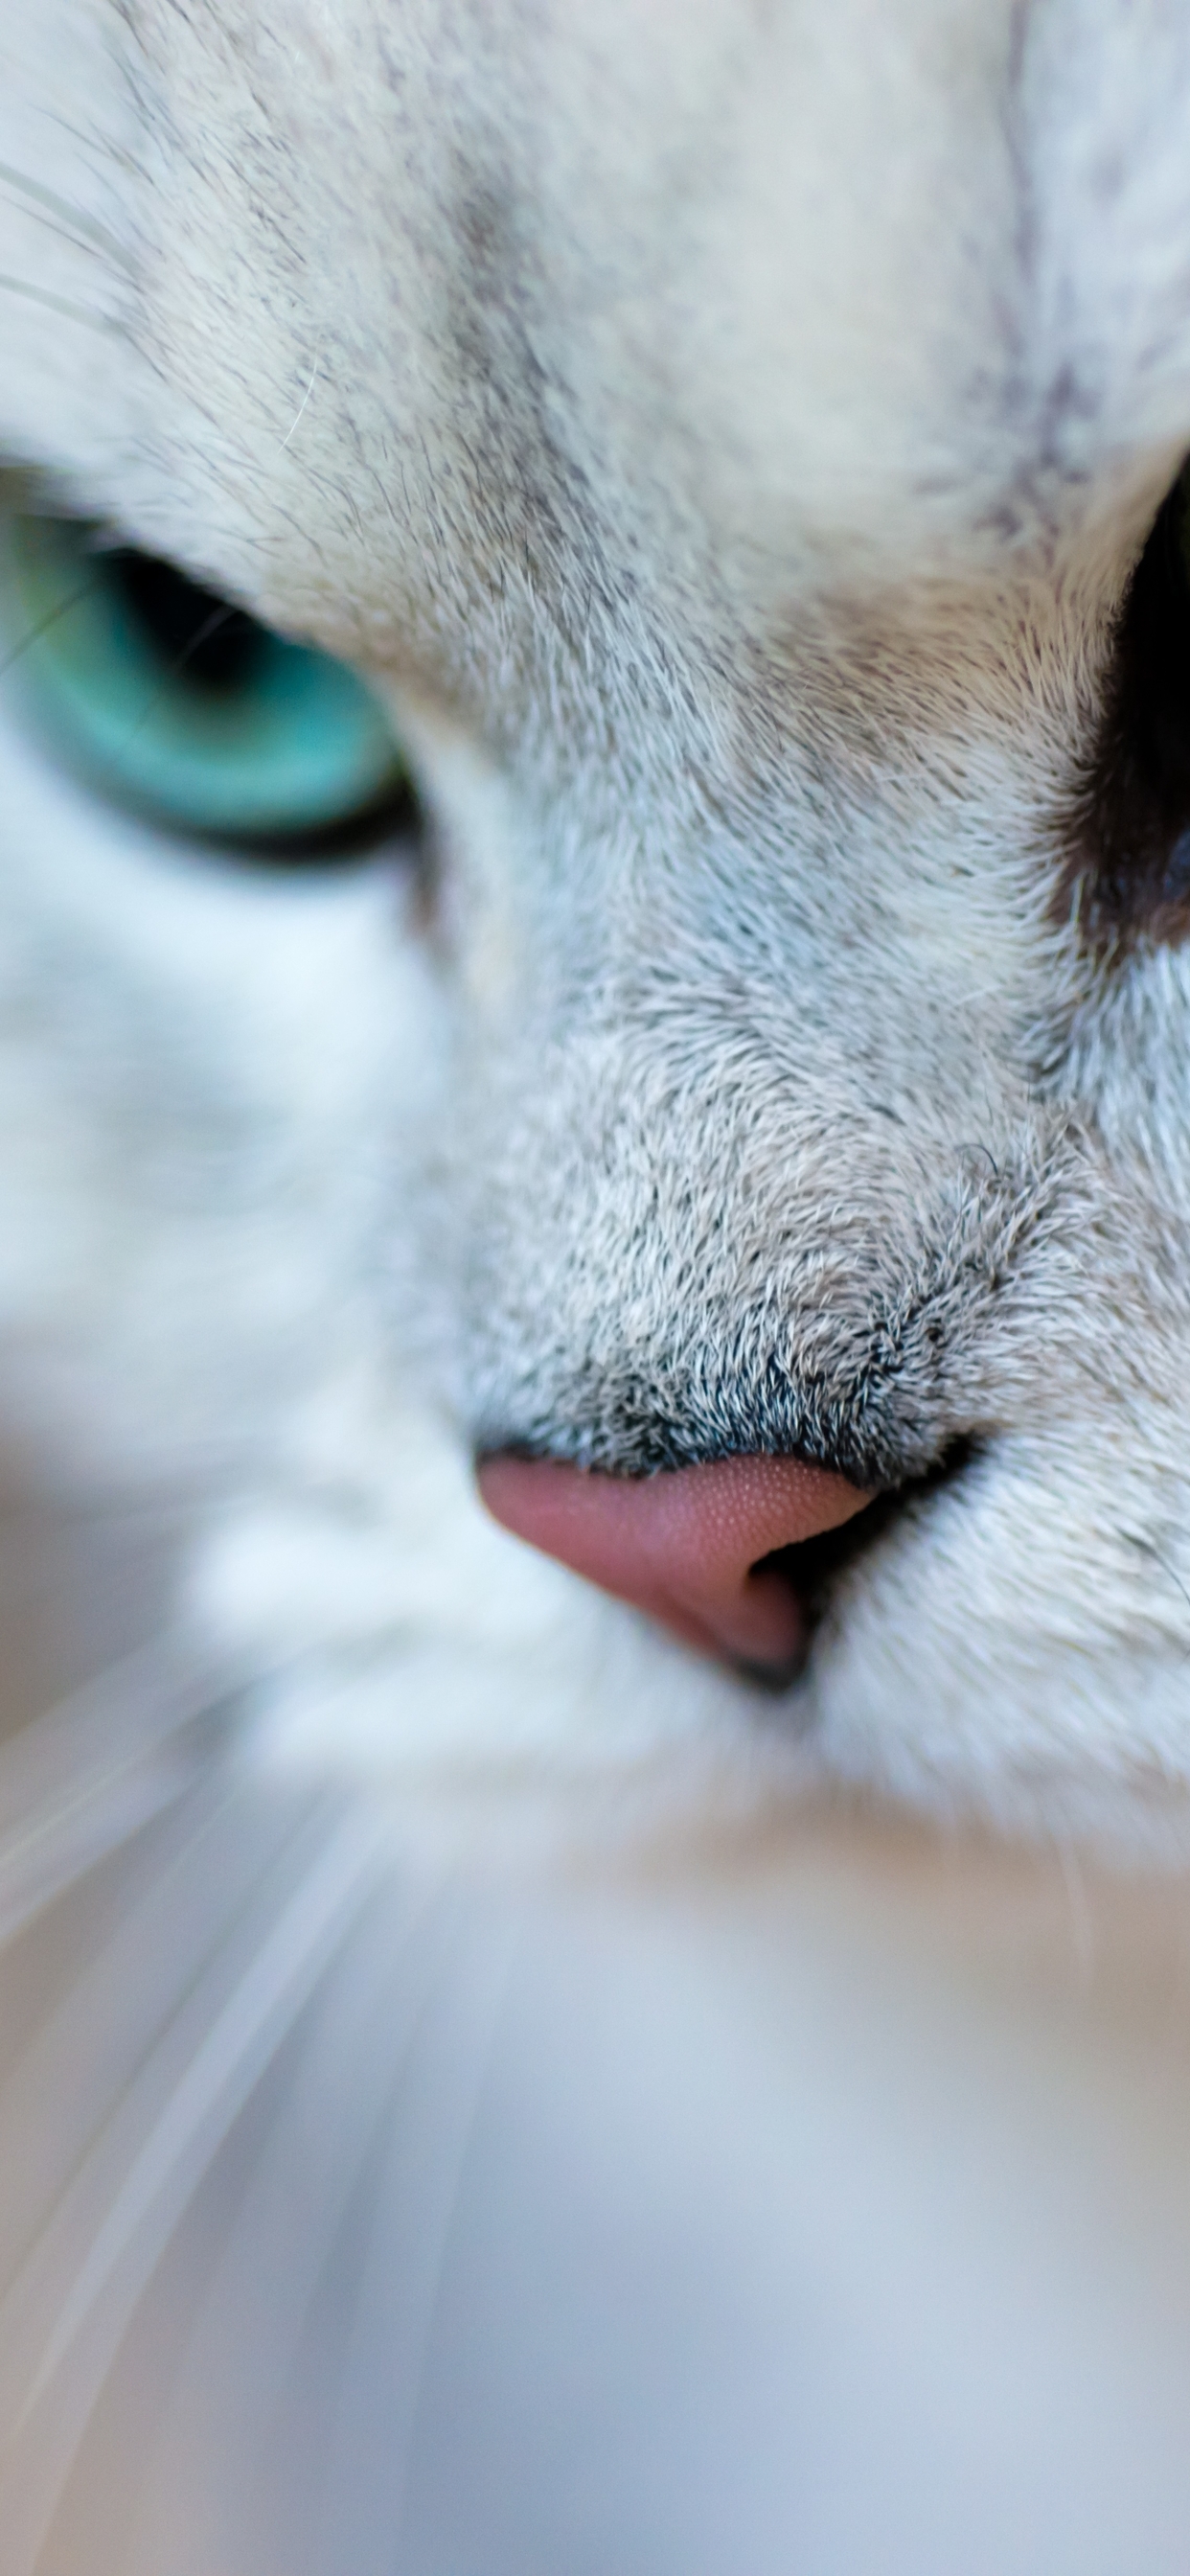 Картинка: Кошка, кот, взгляд, глаза, усы, нос